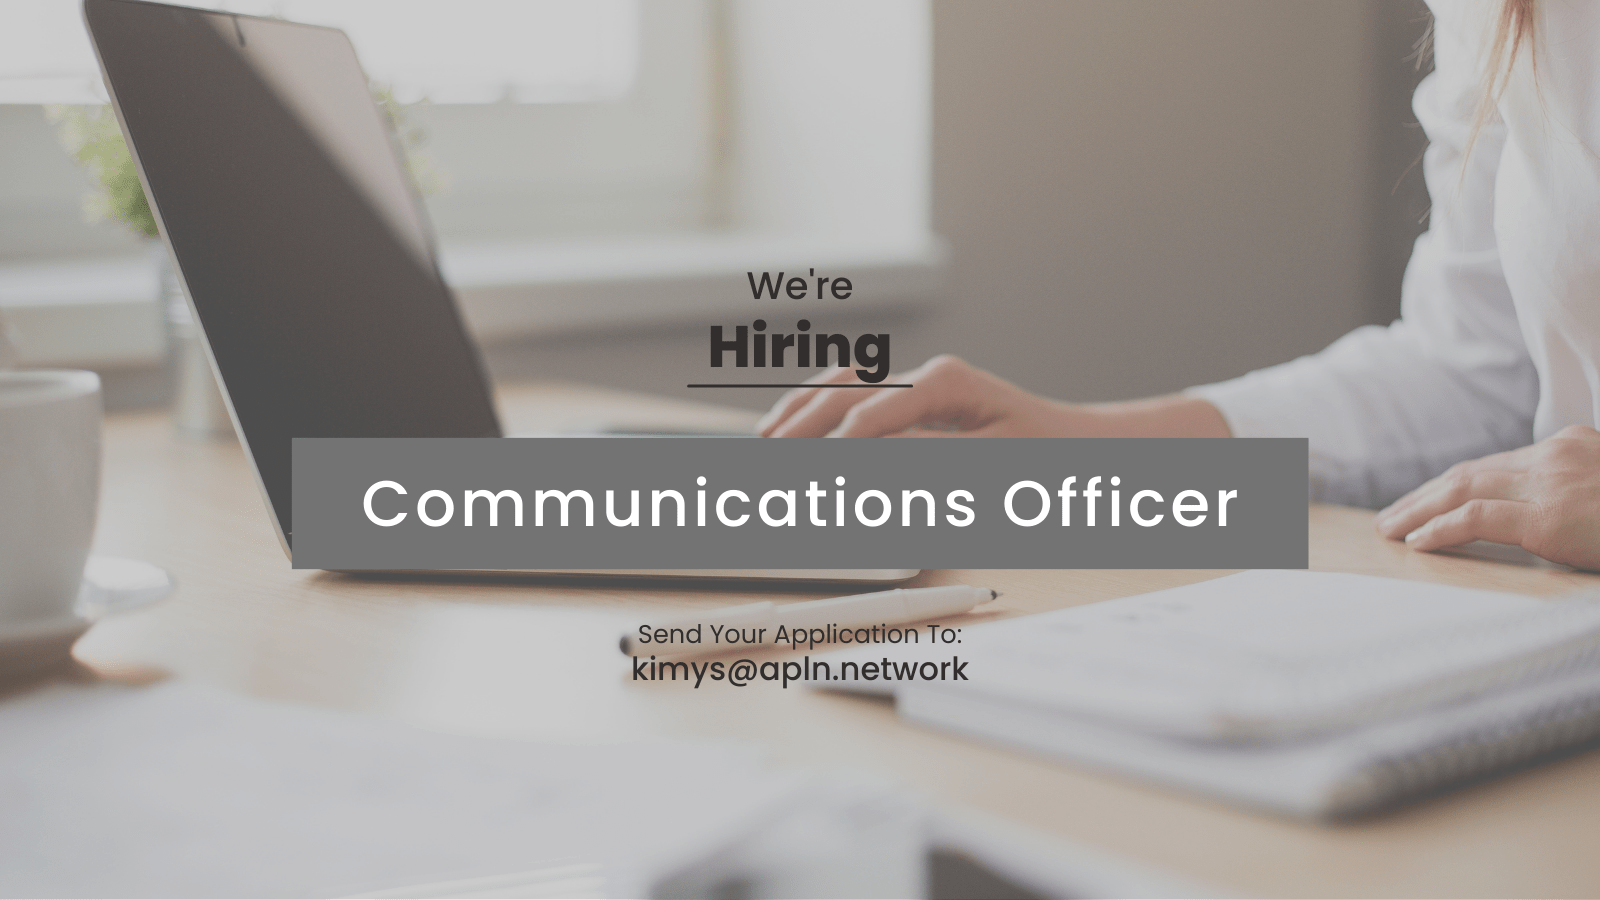 [Job Advert] Communications Officer